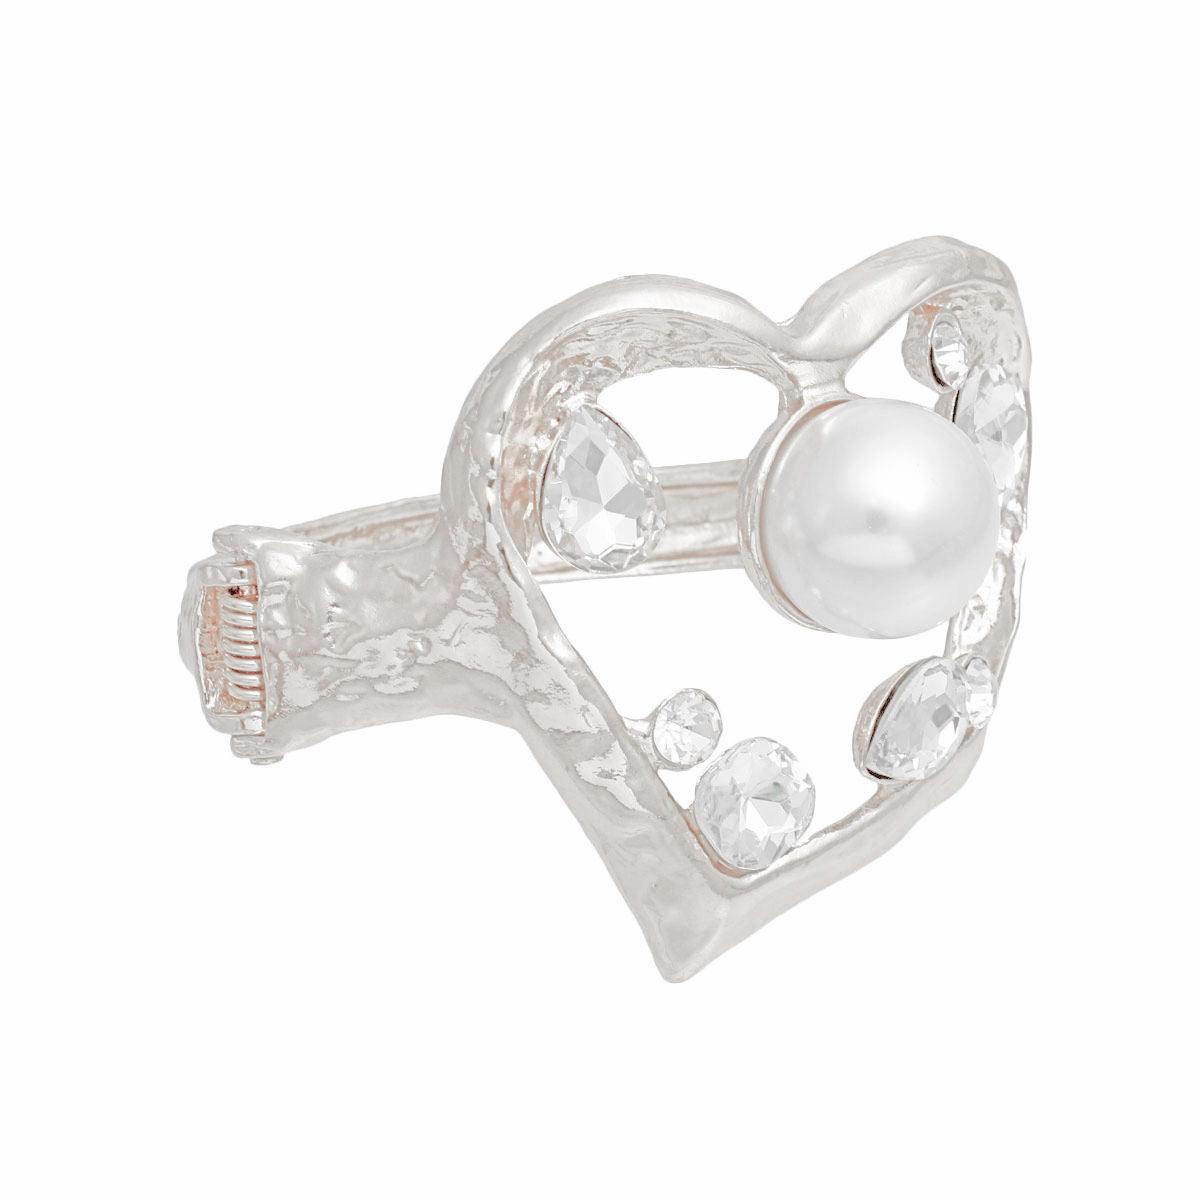 Unlock Love with the Silver Open Heart Crystal Hinge Cuff Bracelet